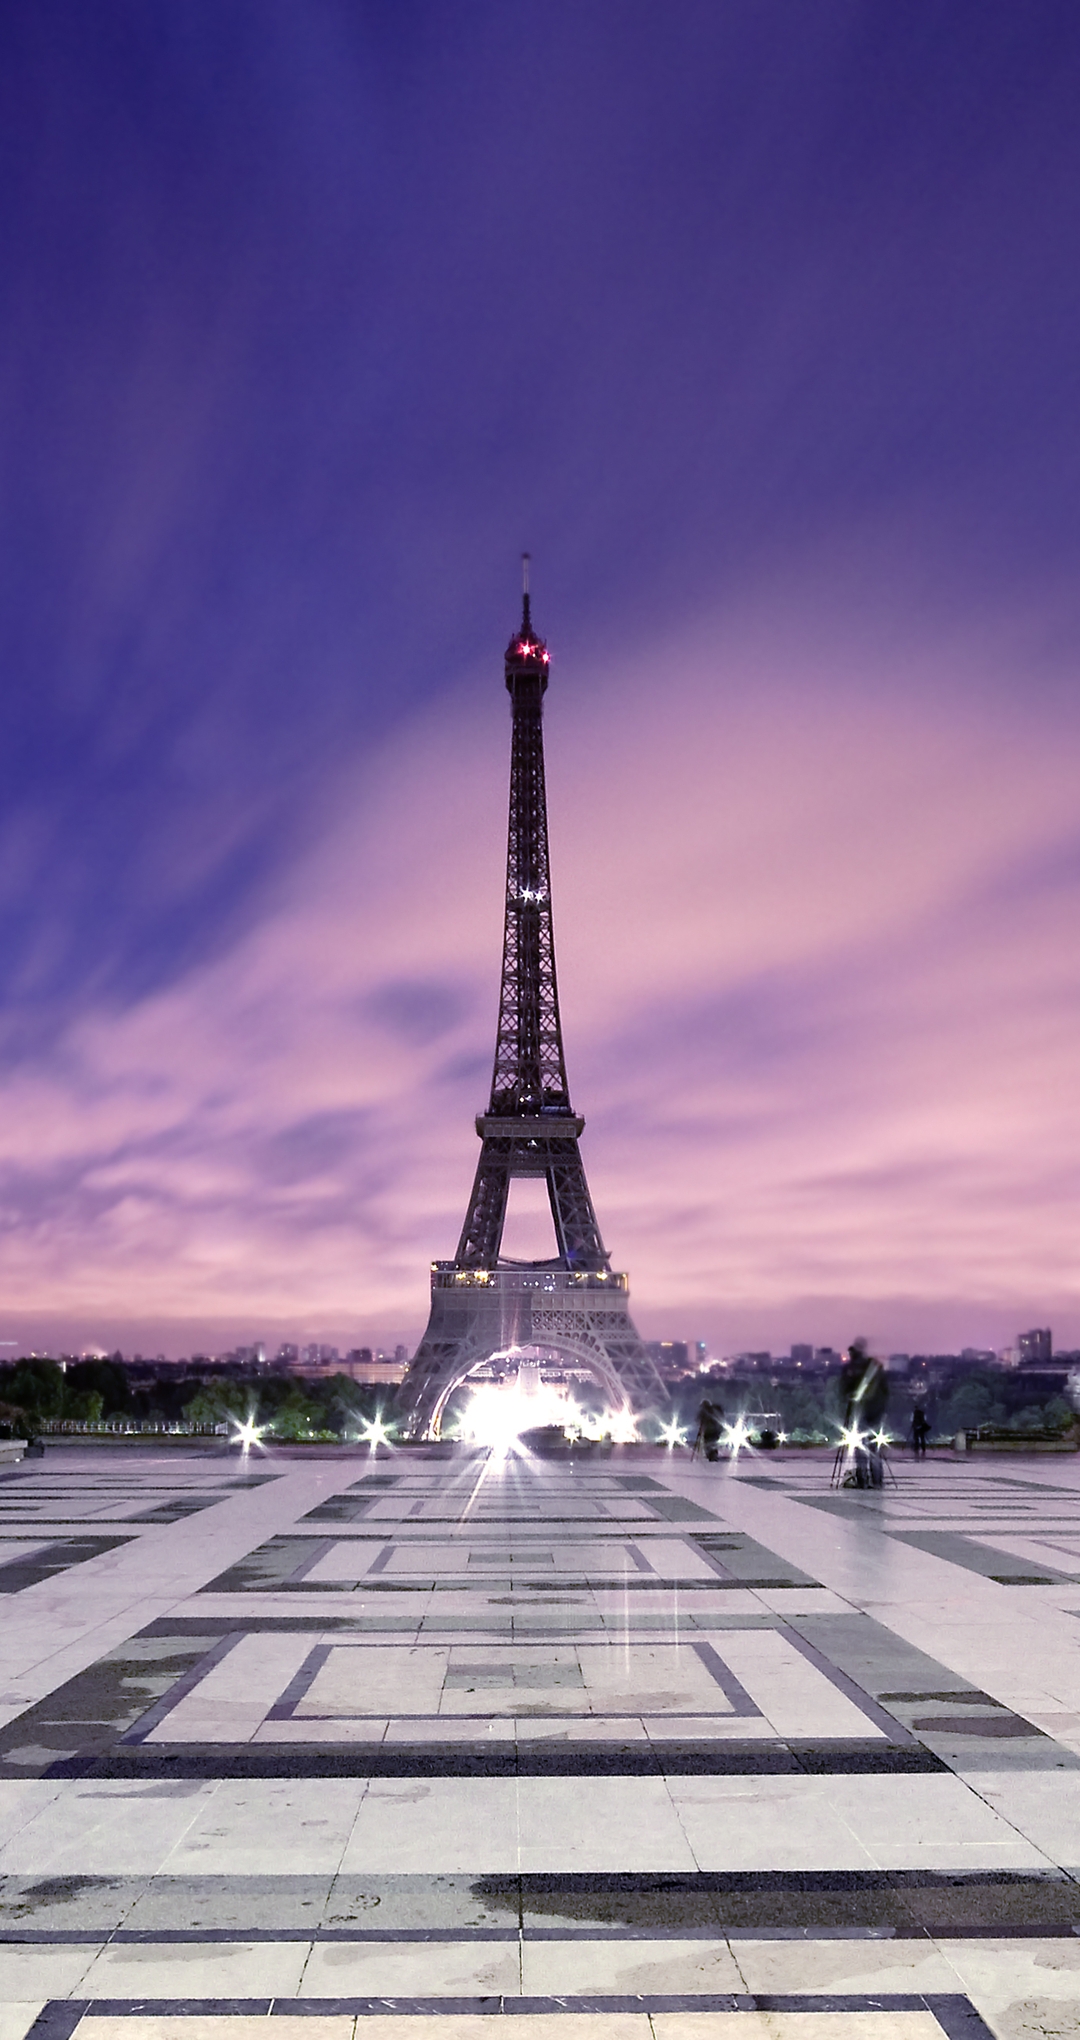 Image: Eiffel tower, Paris, France, evening sky, square, building, beautiful background